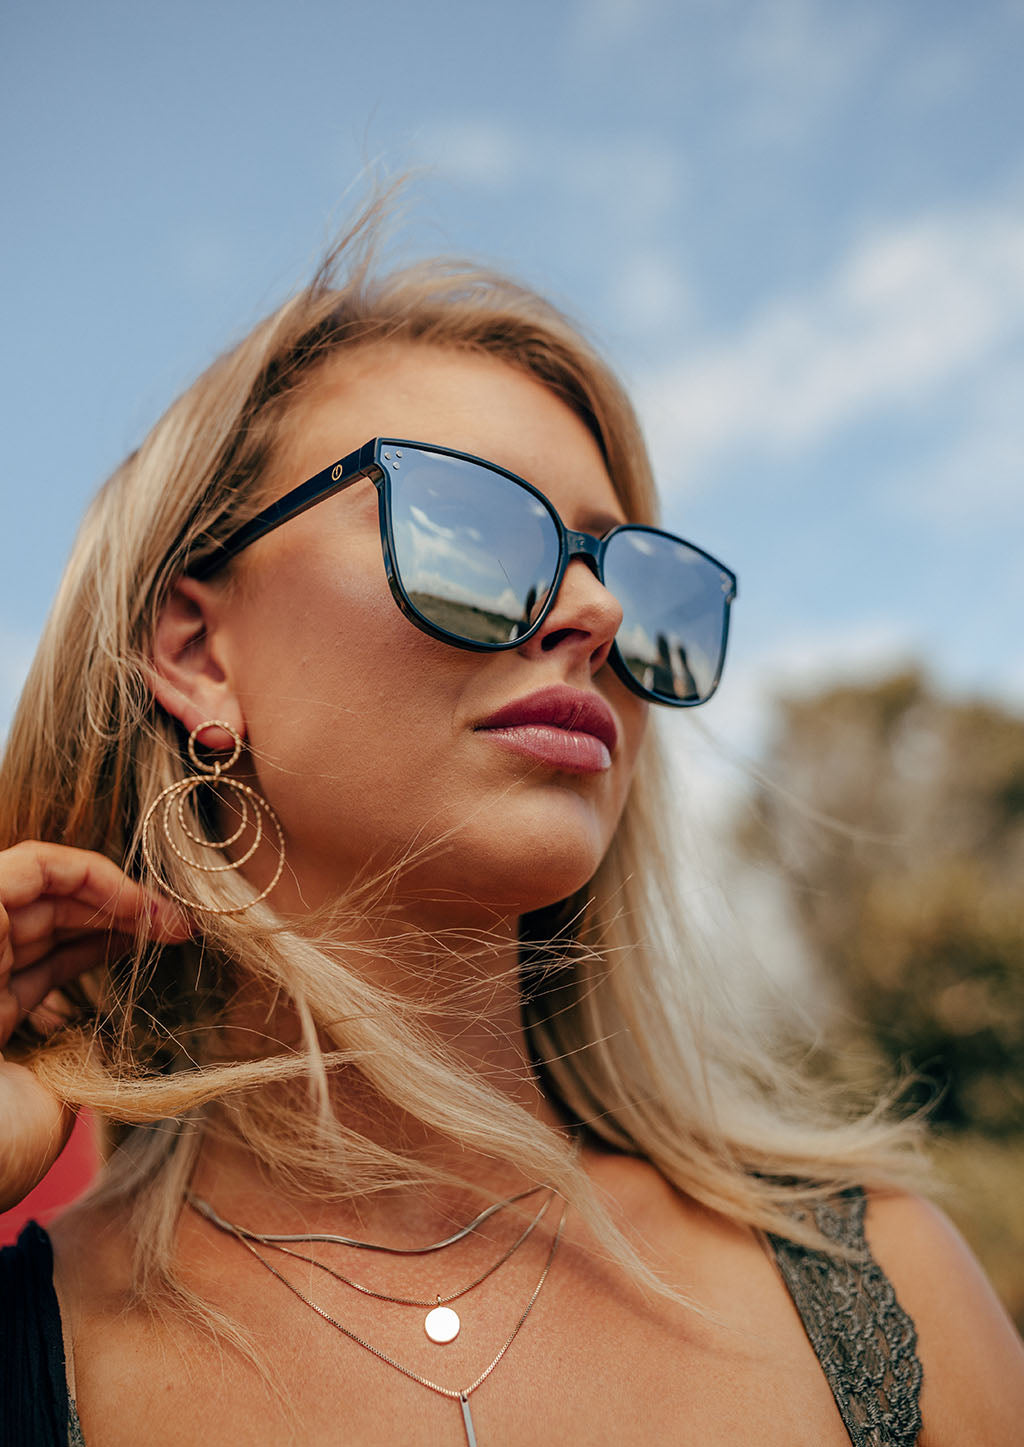 Iris Wayfarer sunglasses - Cool shoot on female model